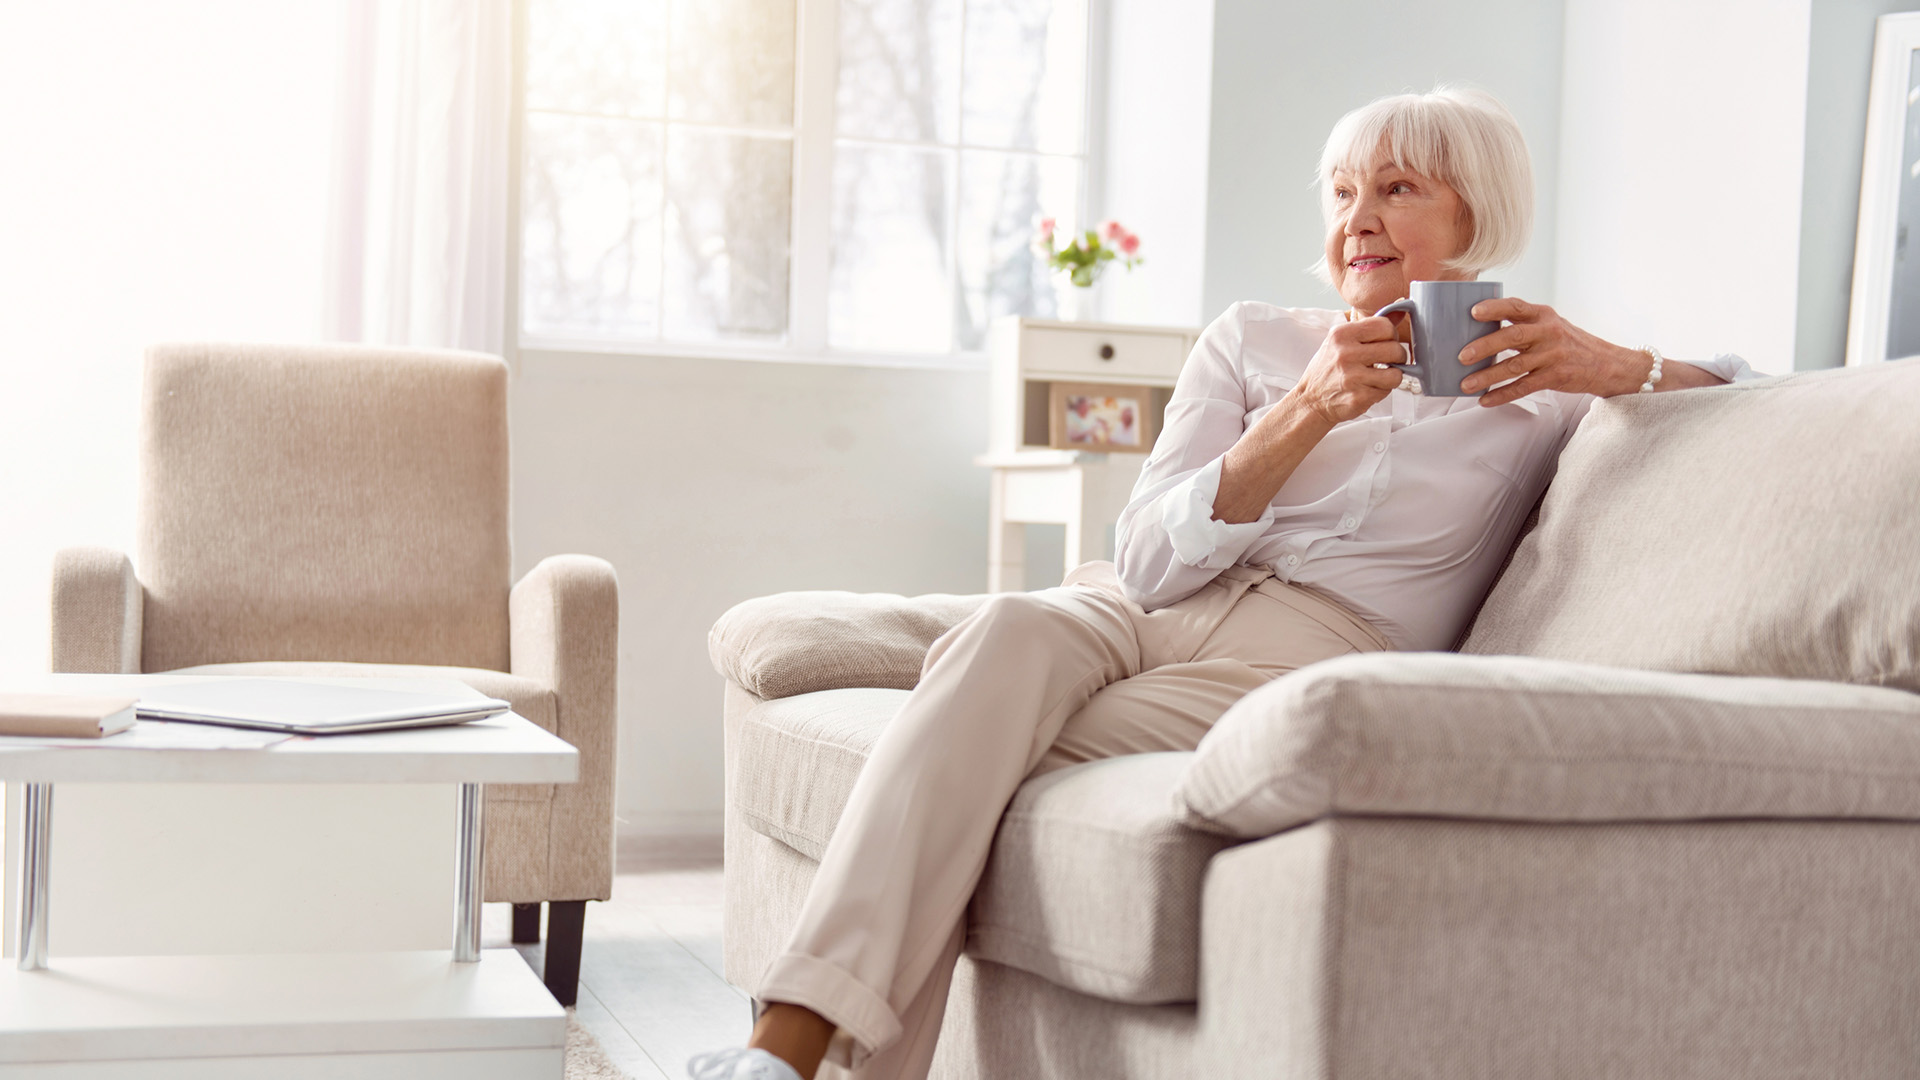 Petite elderly woman drinking coffee in her living room